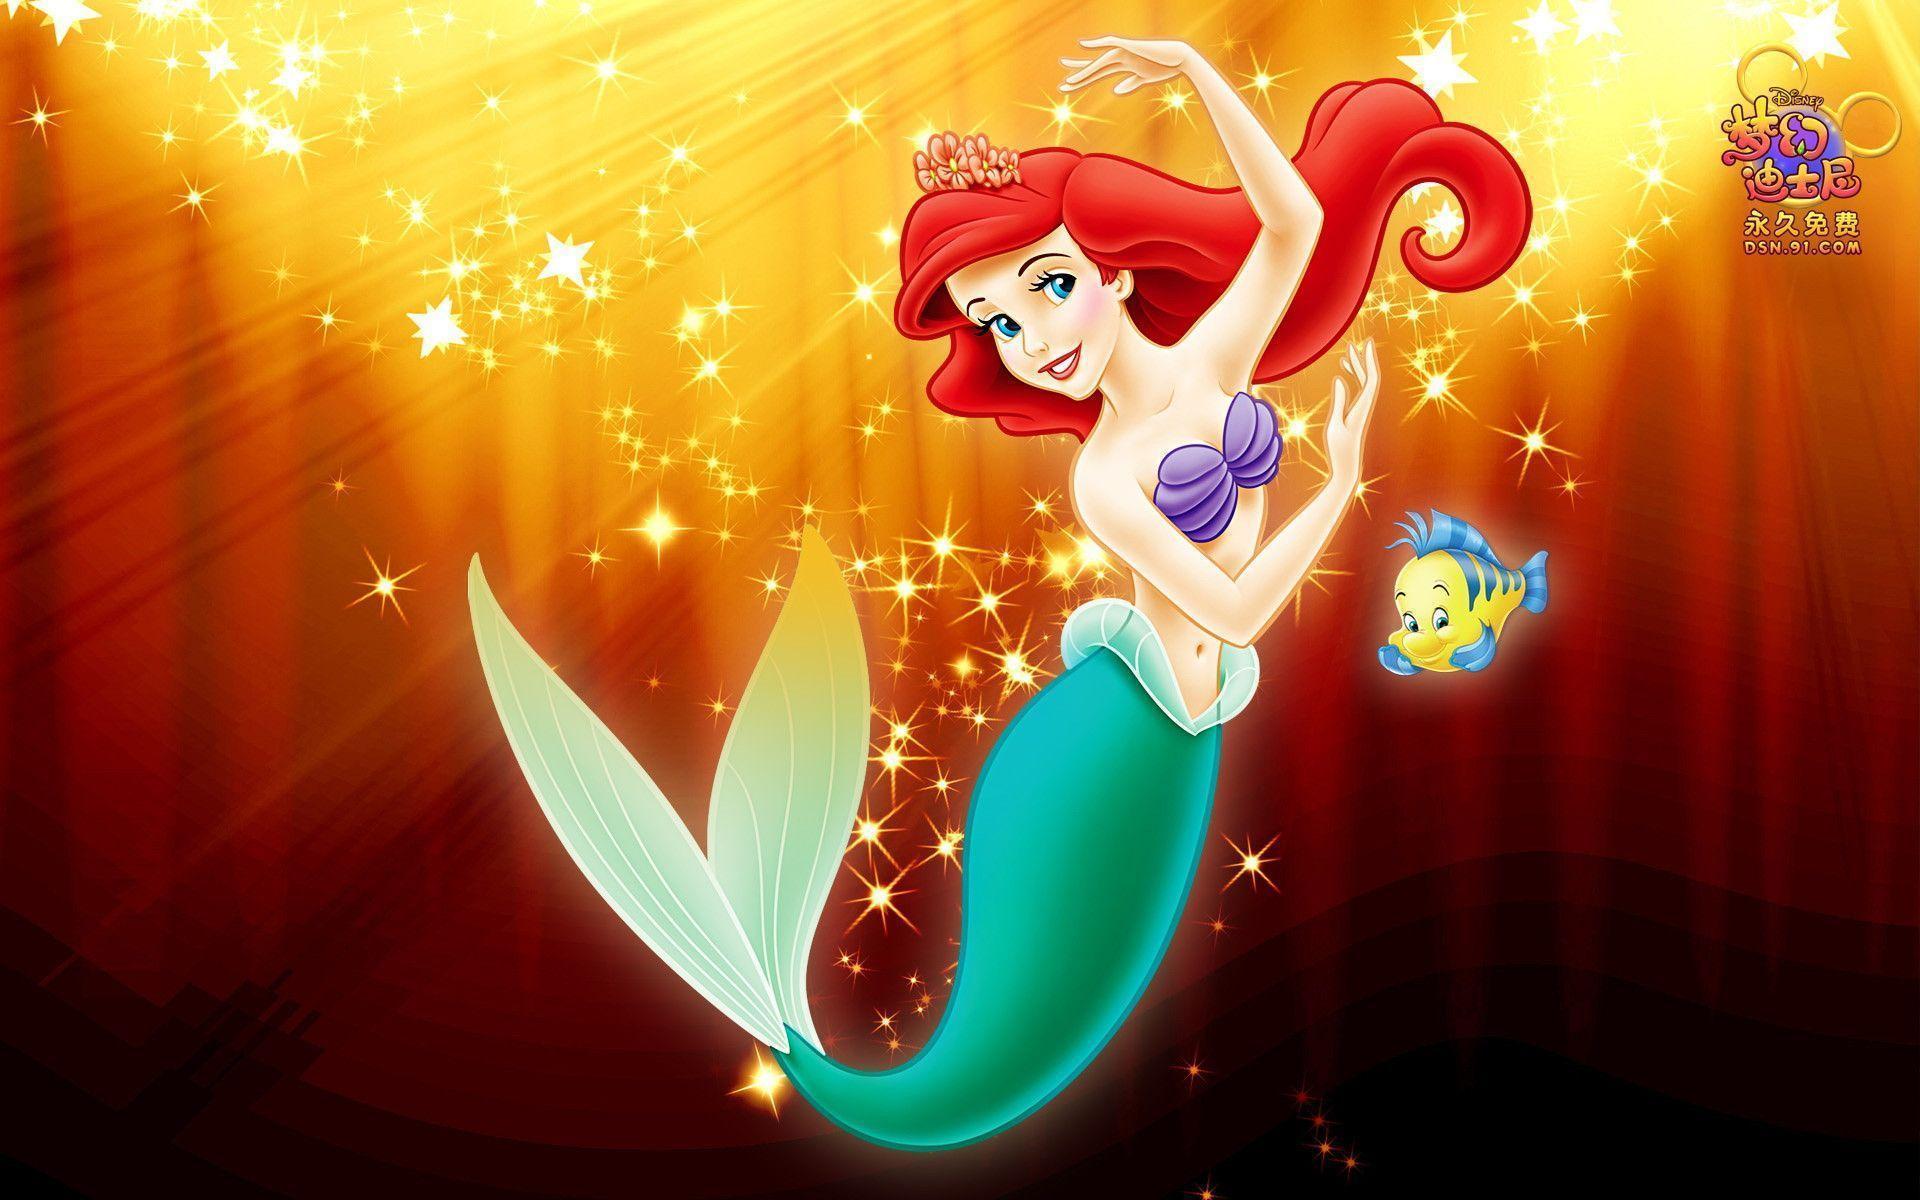 Disney Princess Ariel Wallpaper. Foolhardi